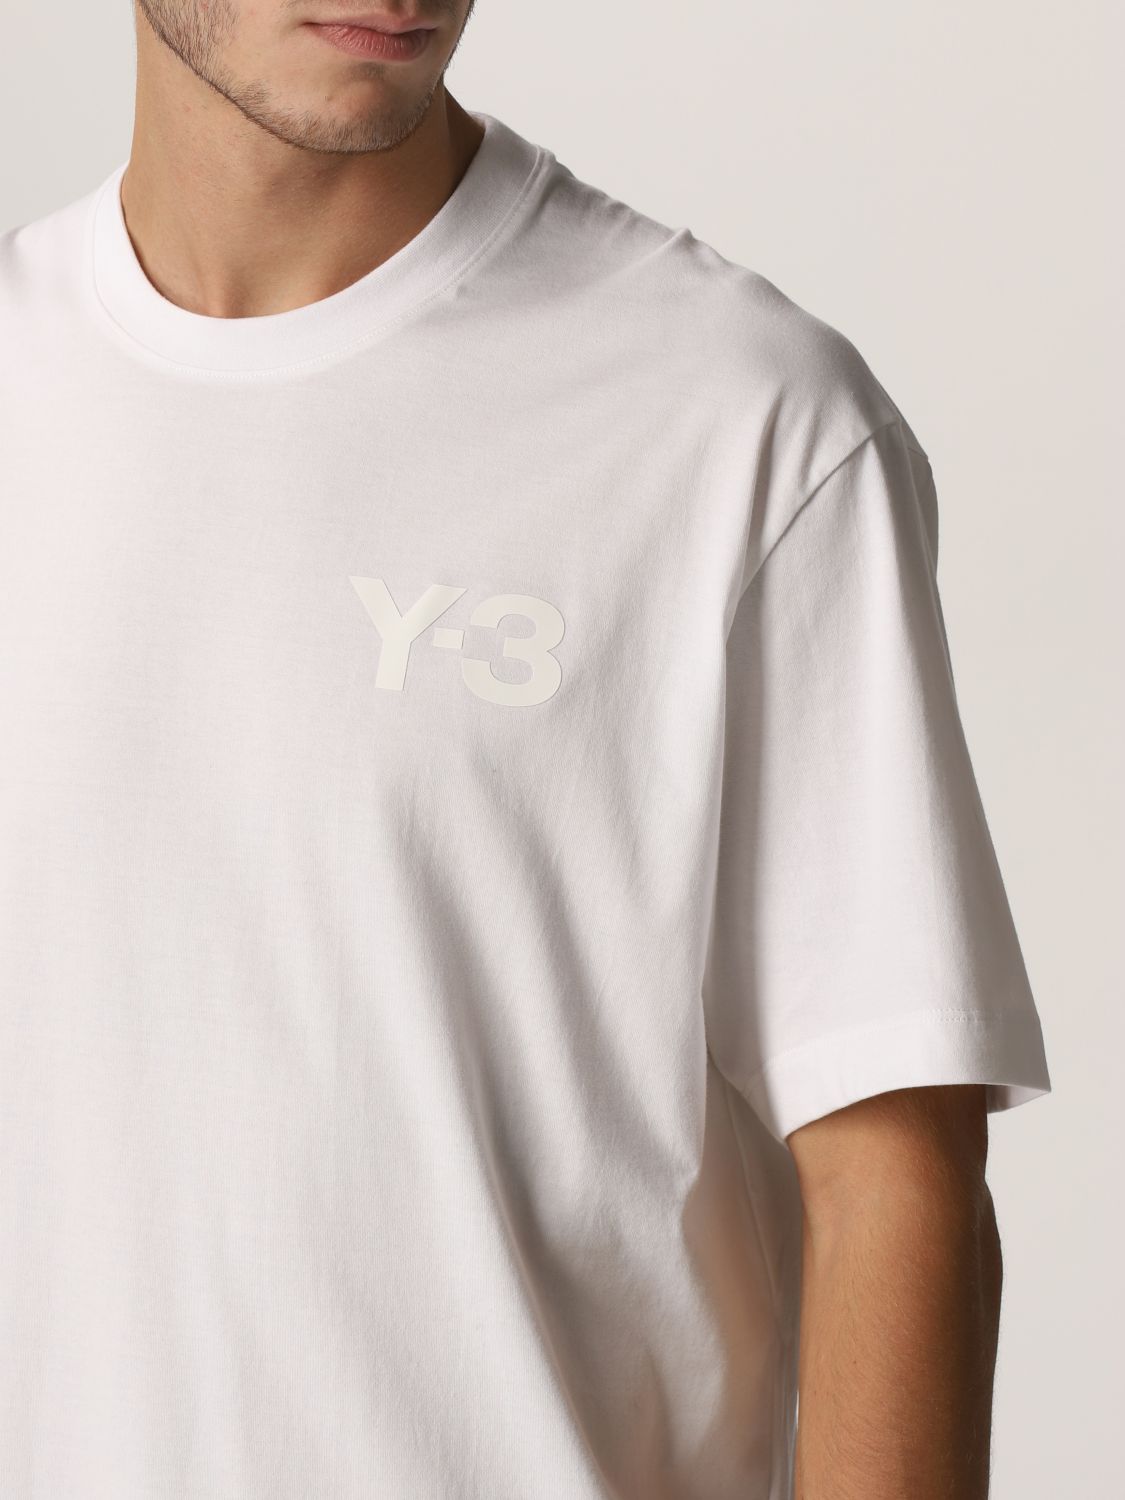 organize flower investment Y-3: T-shirt men - White | T-Shirt Y-3 FN3359 GIGLIO.COM